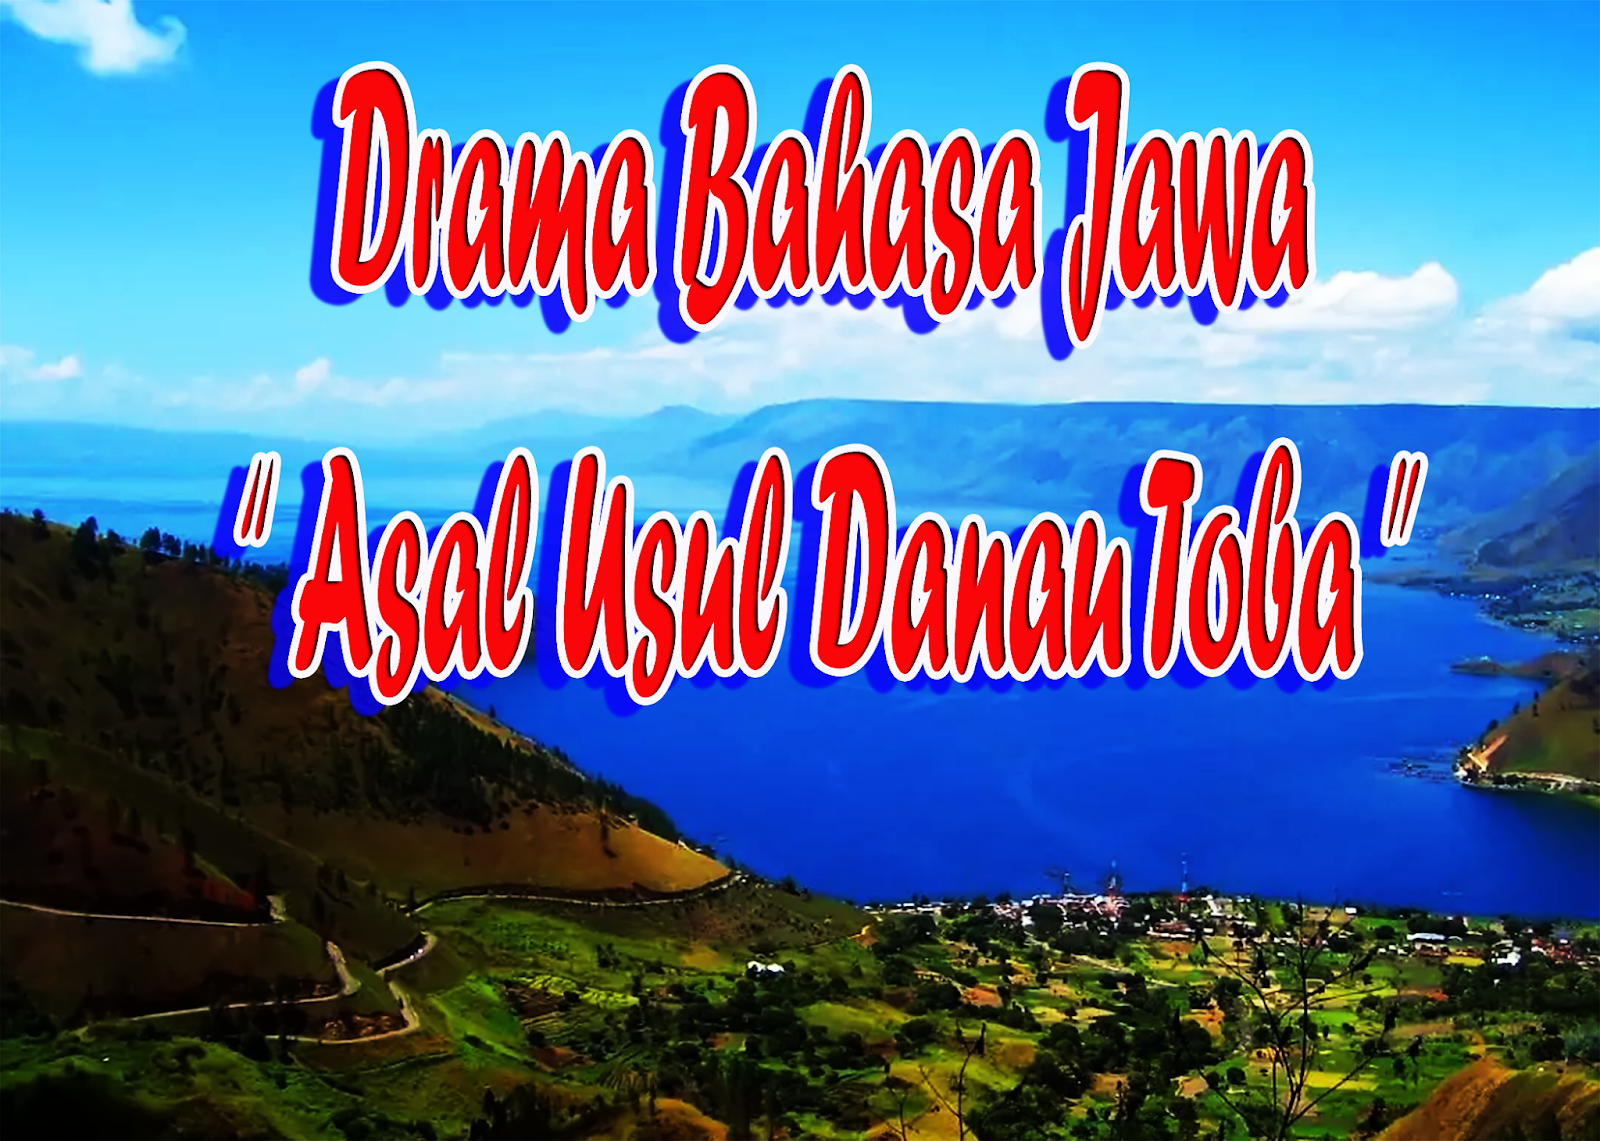 Danau Toba Bahasa Jawa